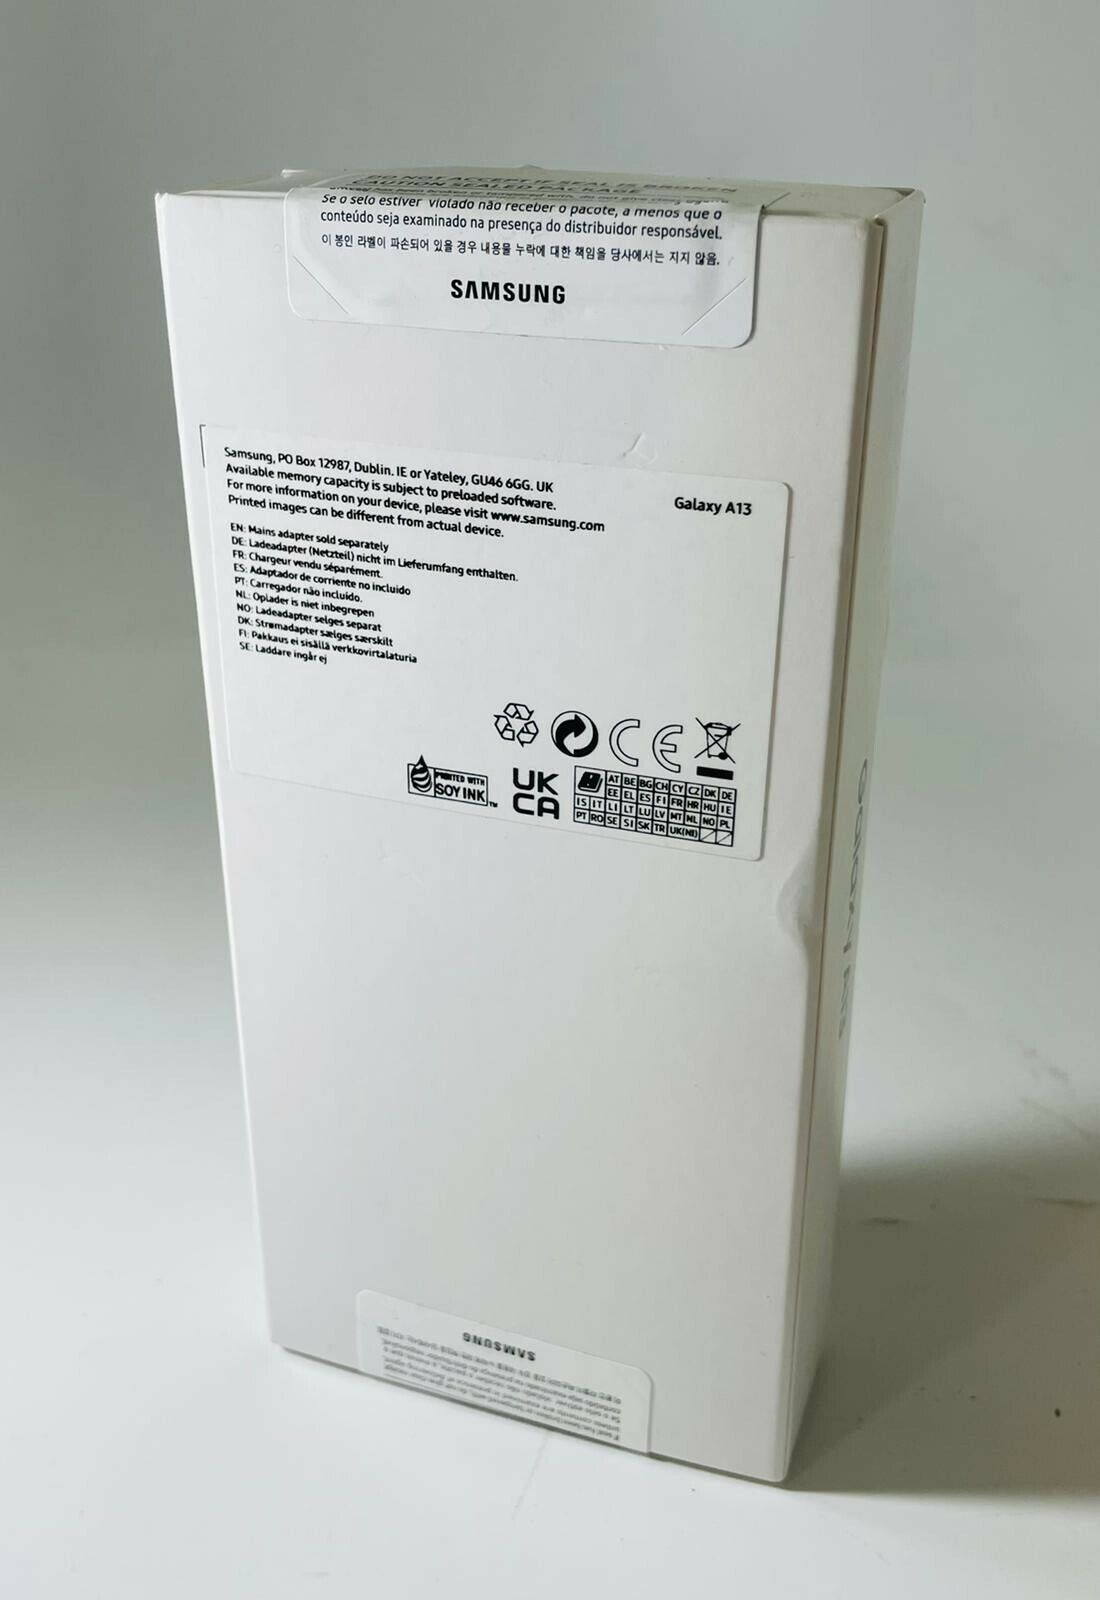 Samsung-Galaxy-A13-64GB-4GB-Unlocked-Android-Smartphone-Black-BRAND-NEW-165462604220-4